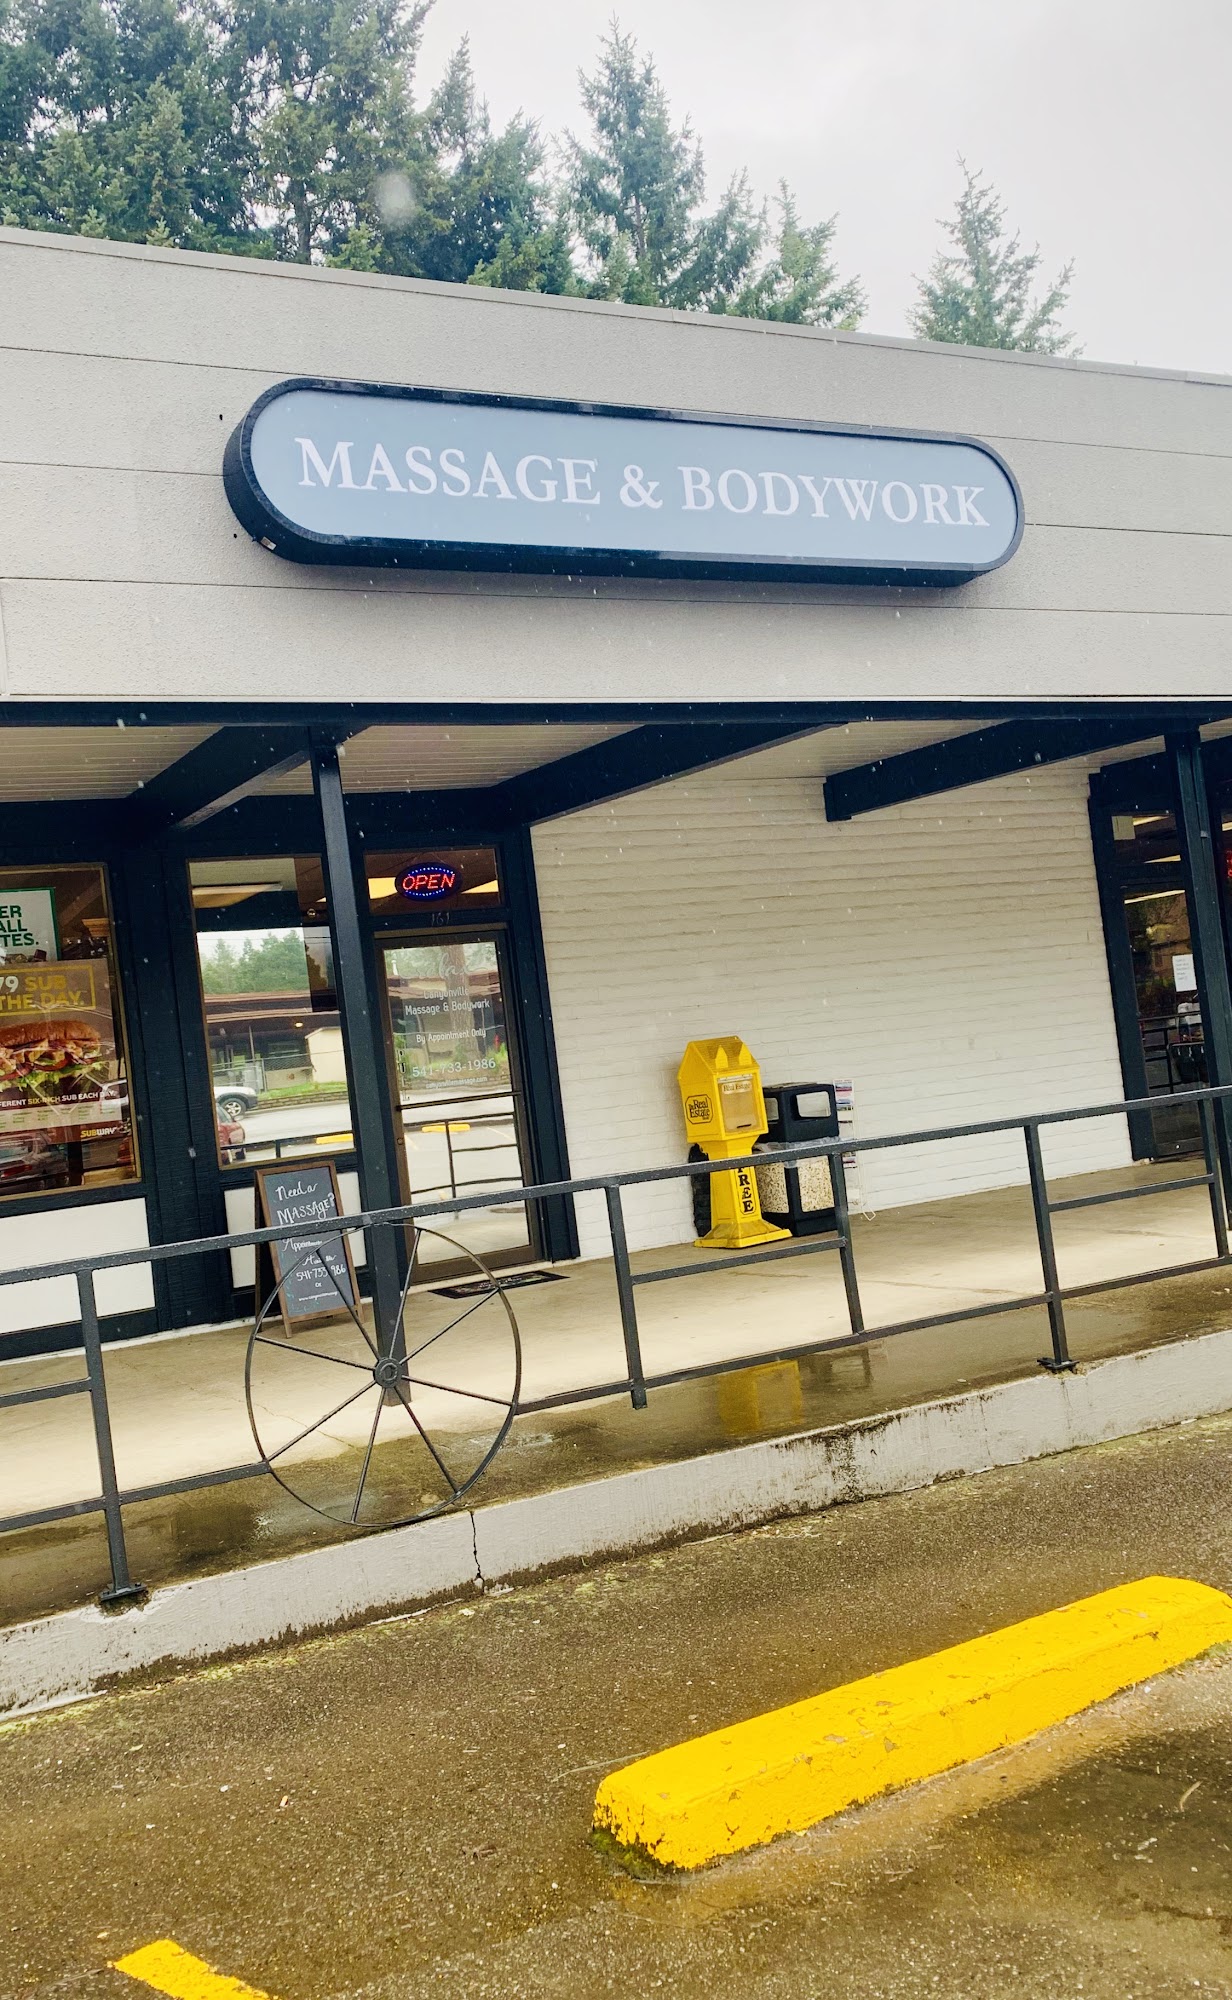 Canyonville Massage & Bodywork 161 N Main St, Canyonville Oregon 97417